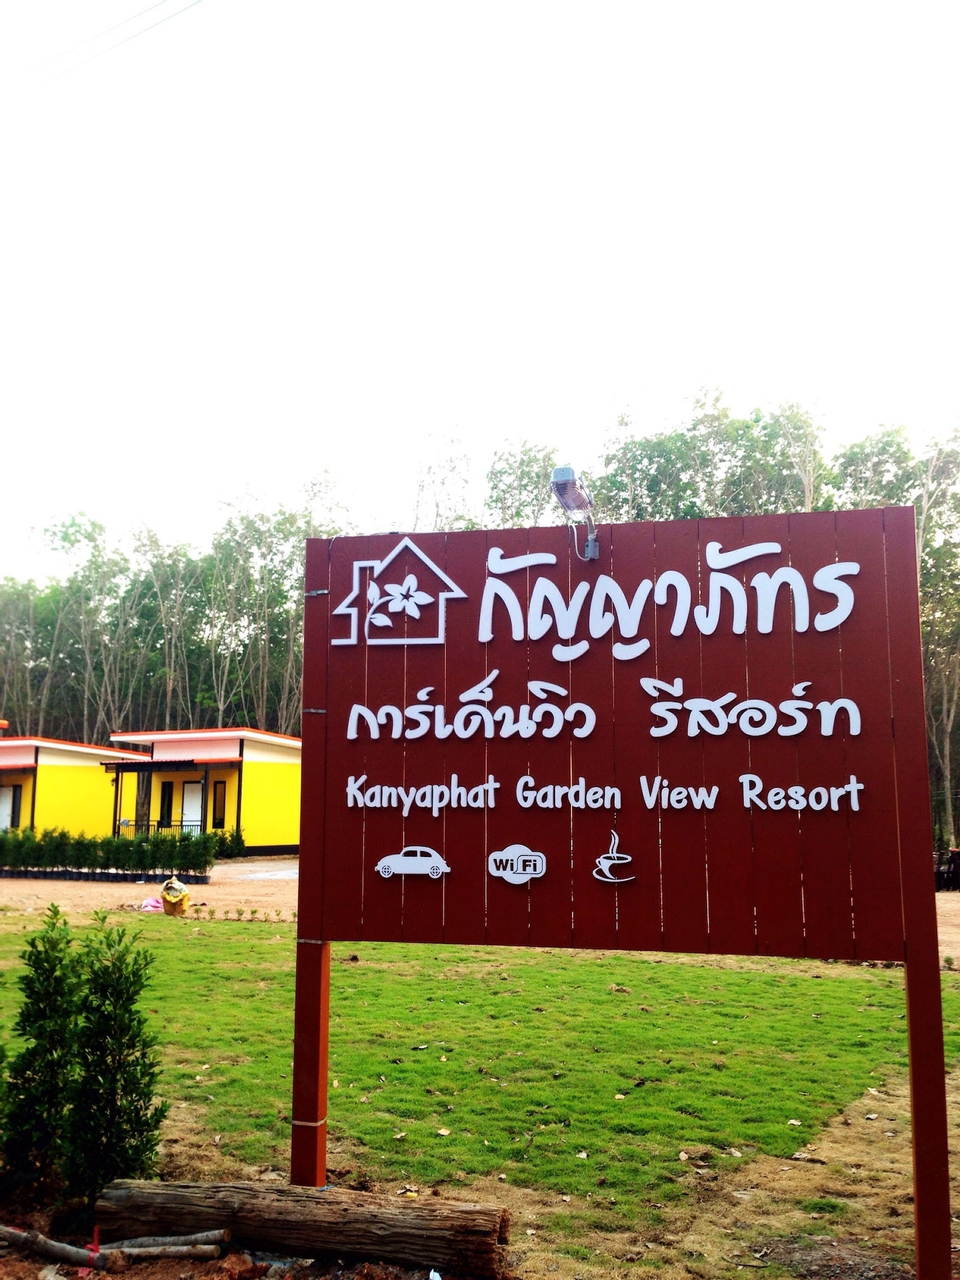 Kanyaphat Gardenview Resort, Ban Dung